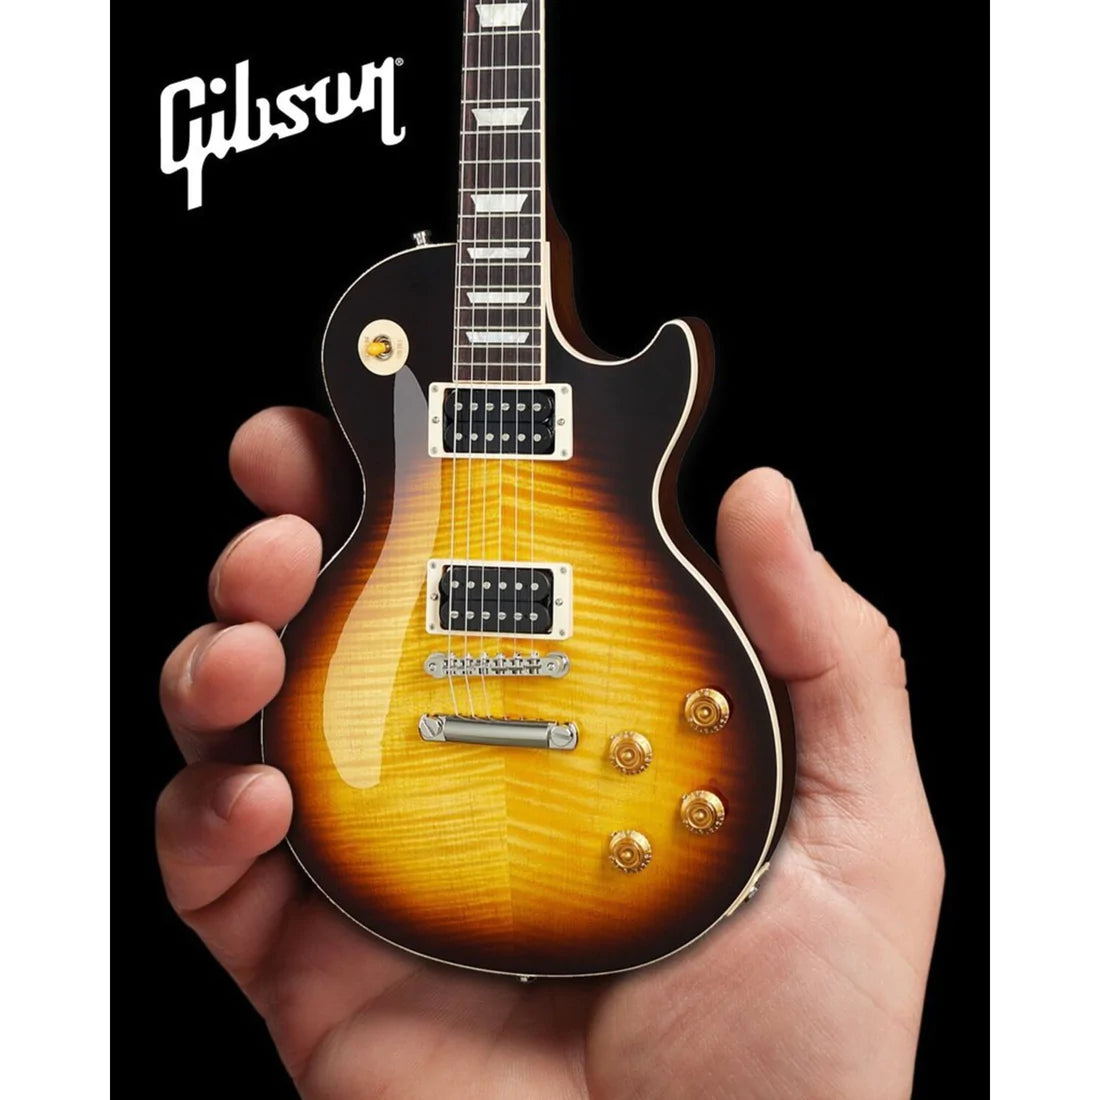 Slash Guns N Roses Gibson Les Paul Standard November Burst Mini Guitar Replica Collectible